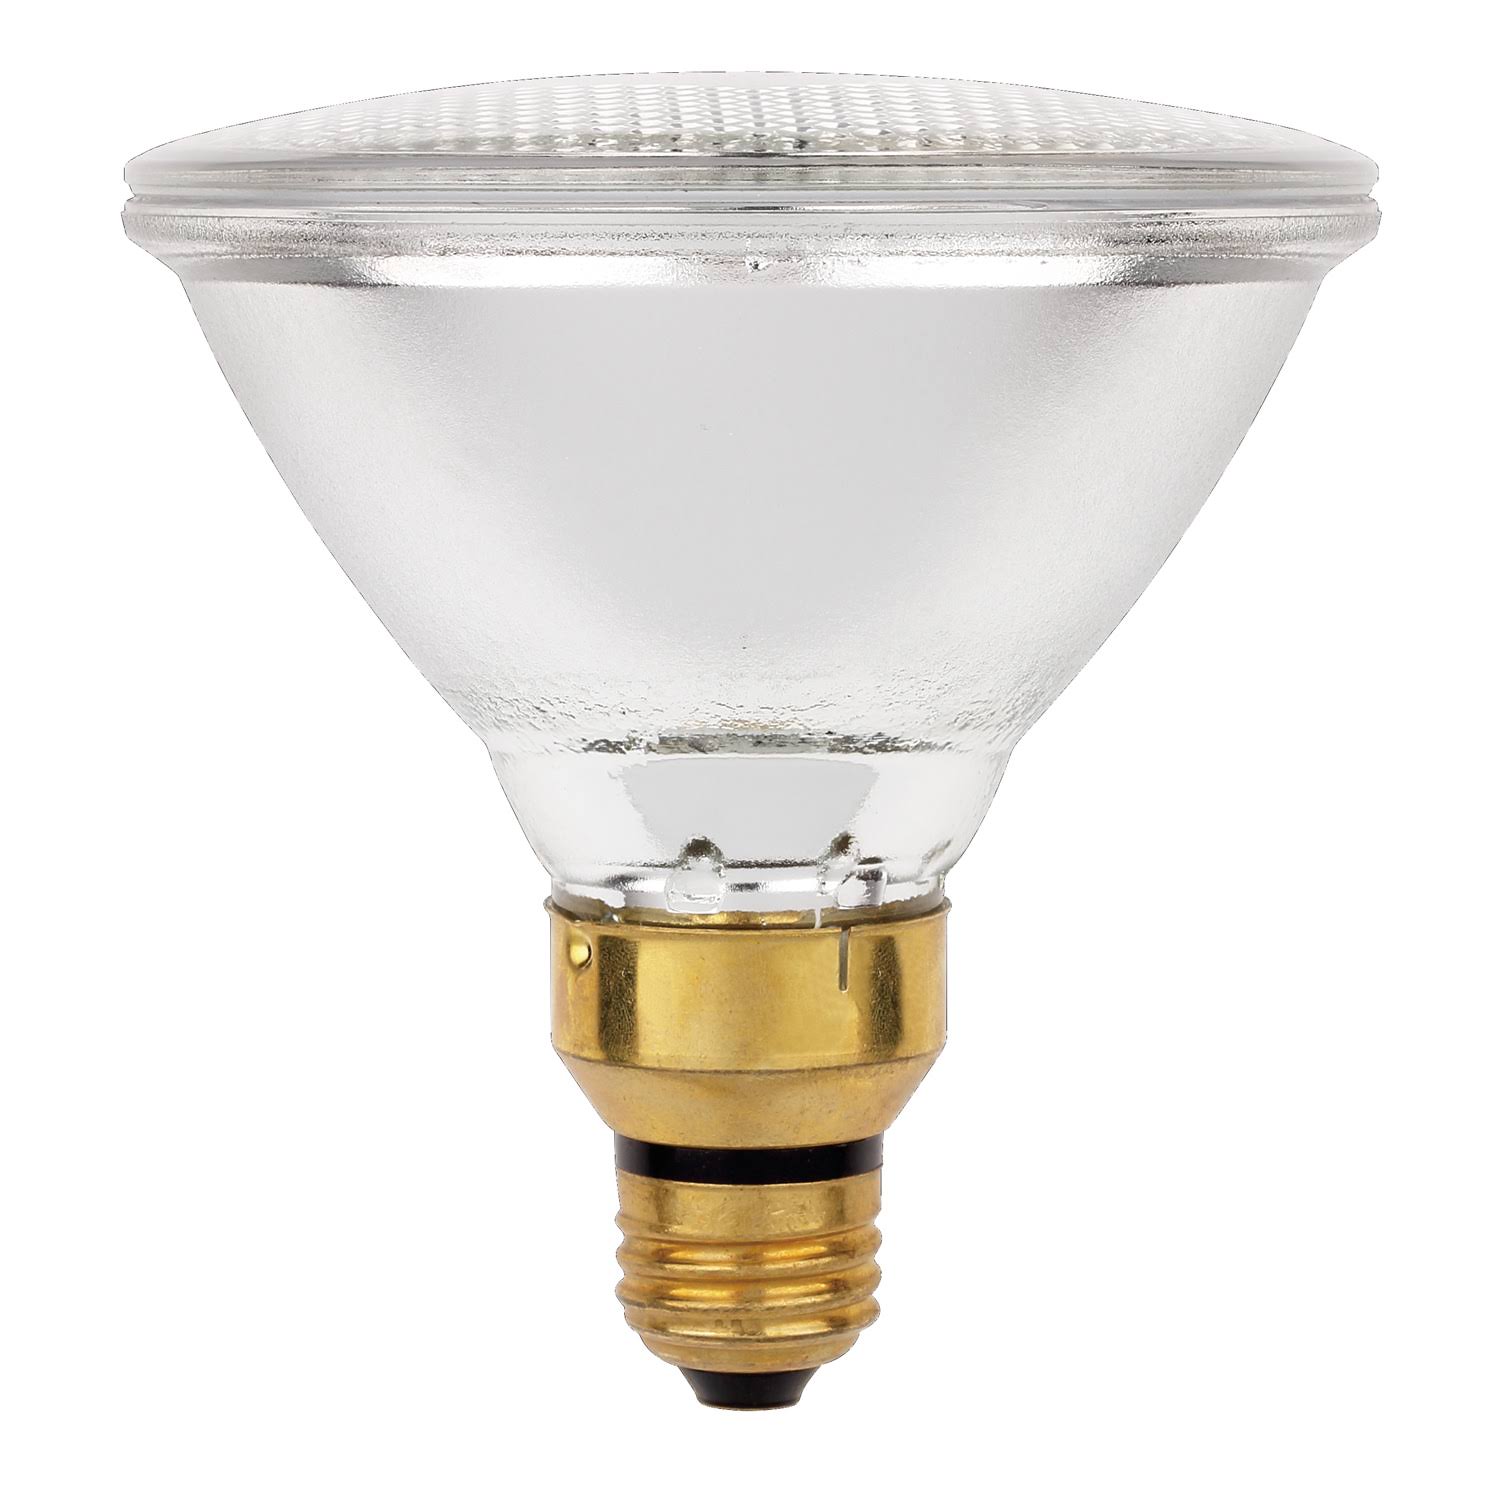 Westinghouse Lighting 3685900 70 Watt PAR38 Eco-PAR Halogen Flood Reflector Clear Light Bulb with Medium Base (2